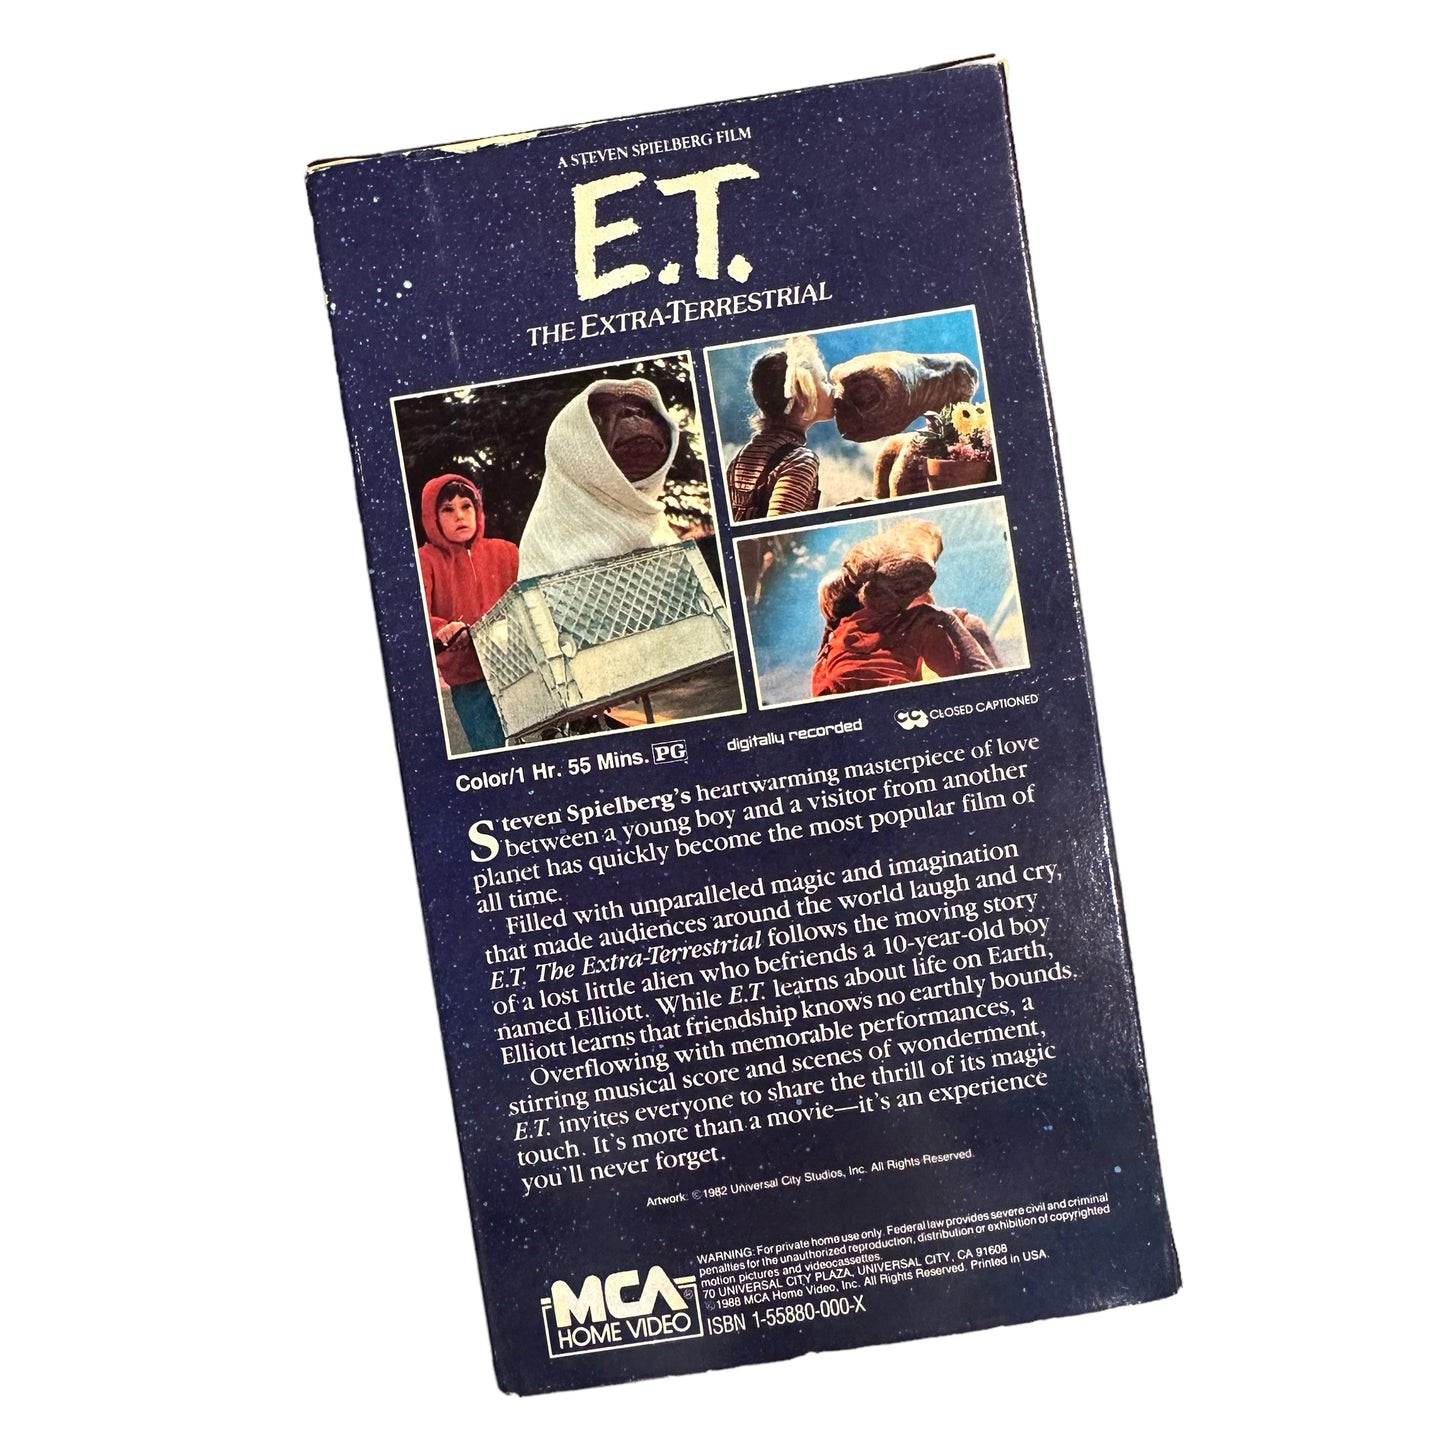 VHS ビデオテープ 輸入版 E.T. イーティー The Extra-Terrestrial 海外版 USA アメリカ ヴィンテージ ビデオ 紙ジャケ